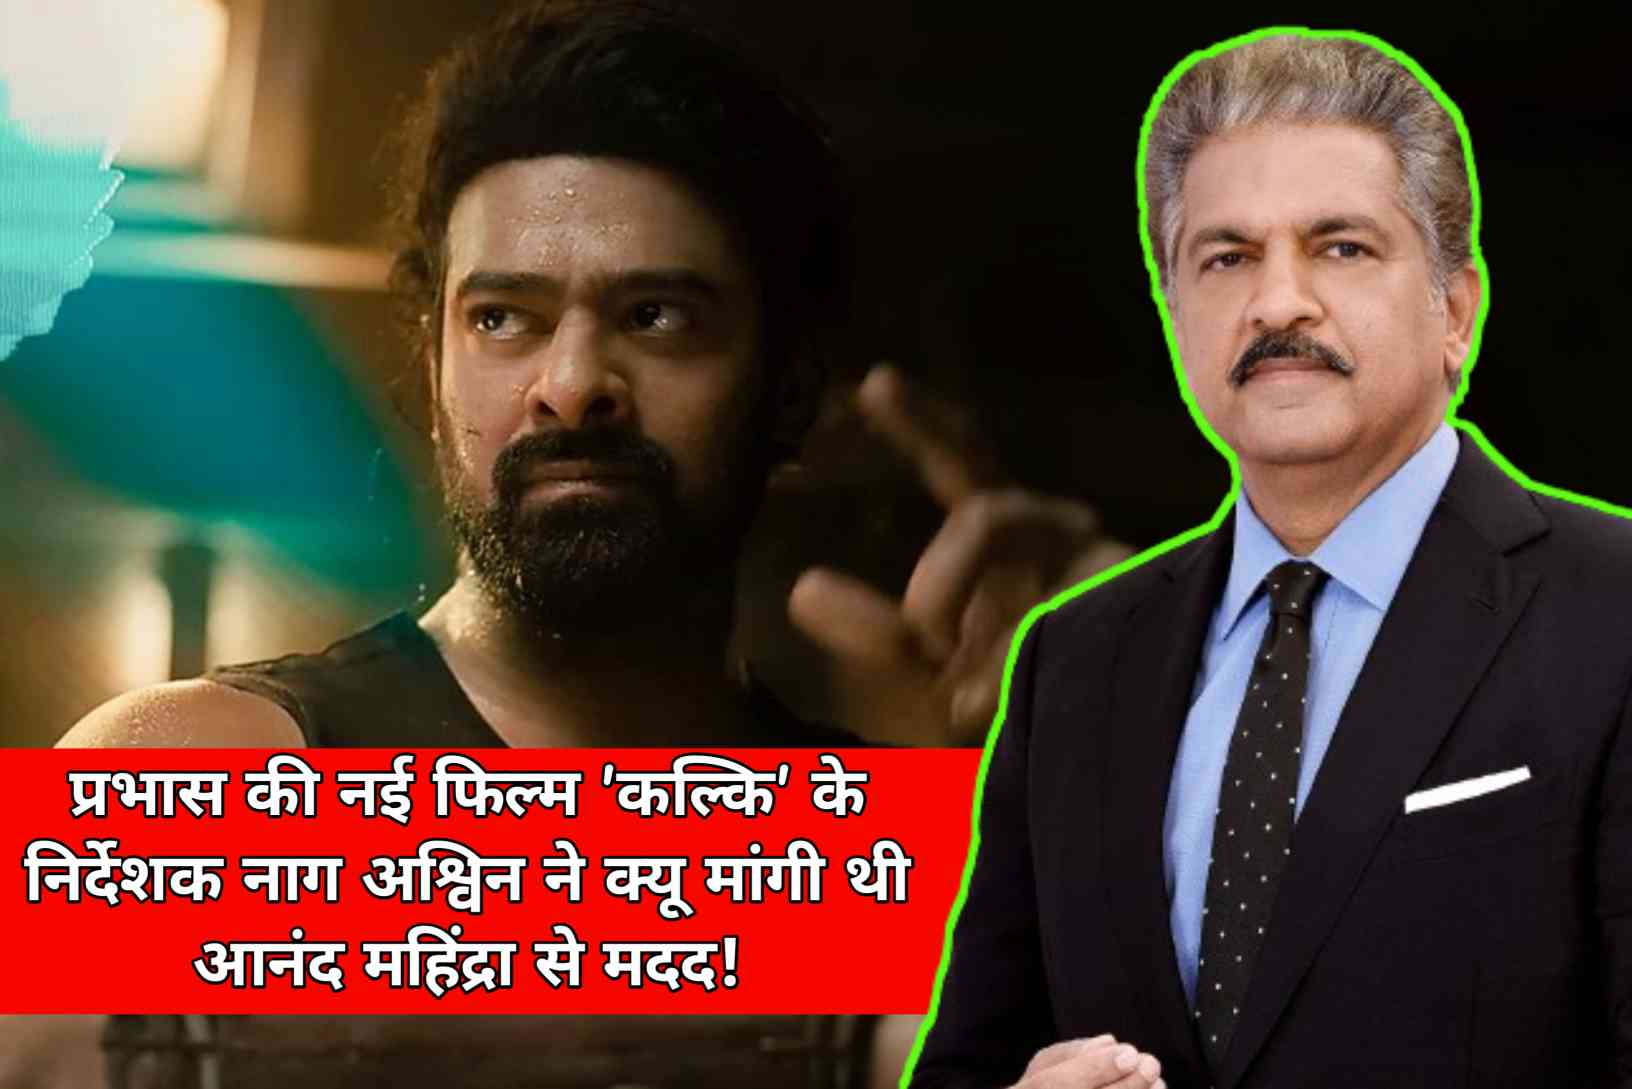 Why did director Nag Ashwin of Prabhas' new film 'Kalki' ask for help from Anand Mahindra